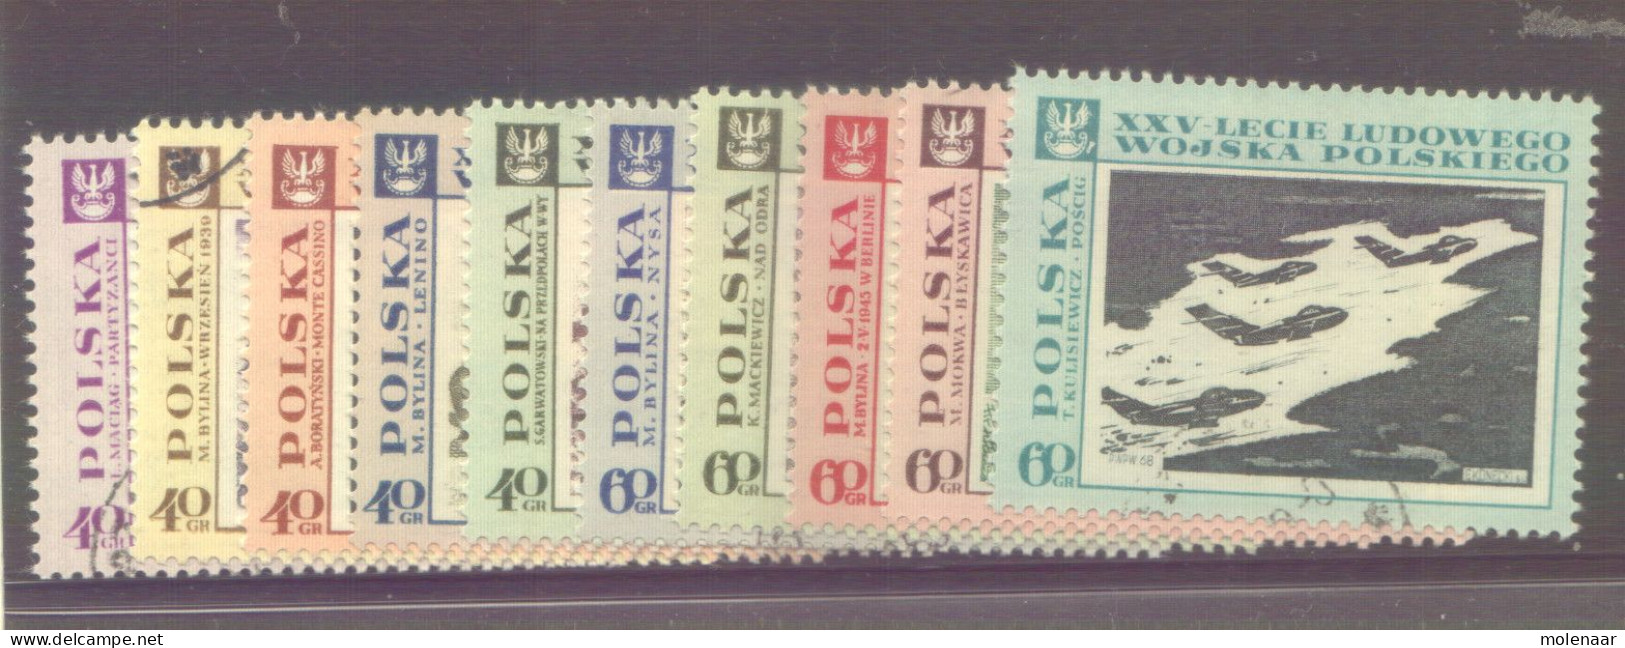 Postzegels > Europa > Polen > 1944-.... Republiek > 1961-70 > Gebruikt No. 1865-1876 (12016) - Gebraucht